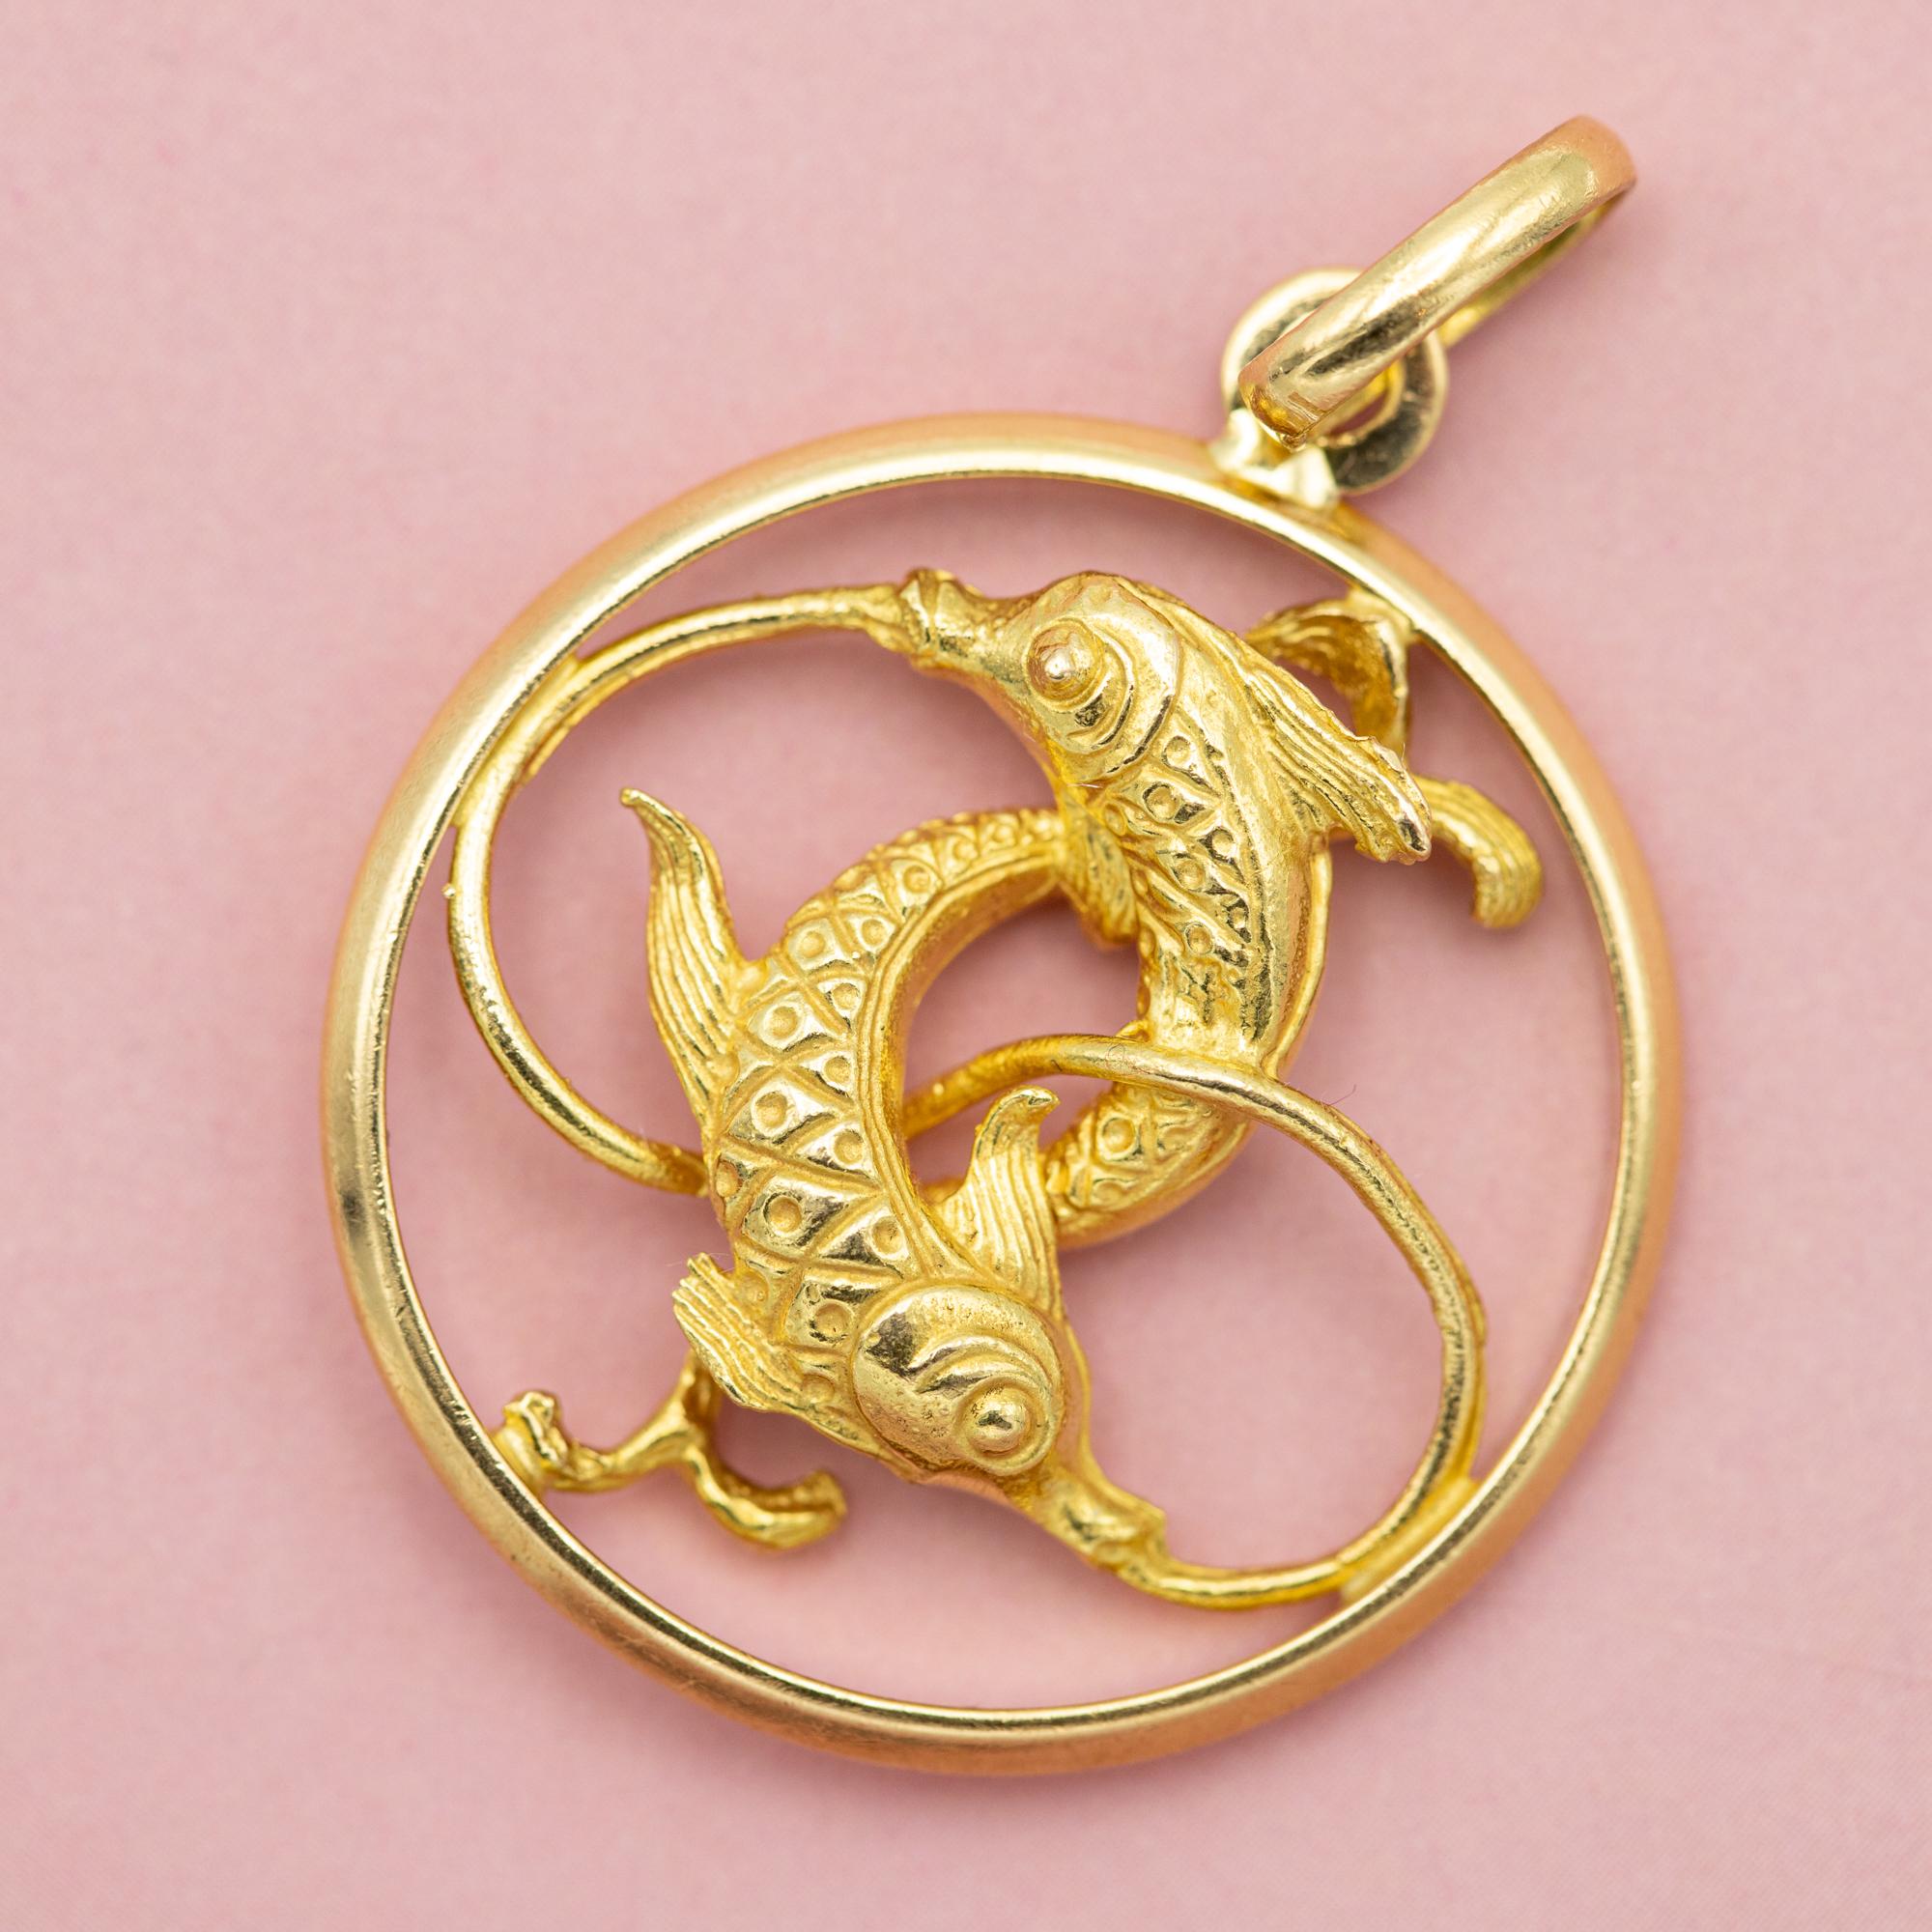 Women's or Men's XL Large 18k zodiac charm pendant - Pisces medallion - solid yellow gold For Sale